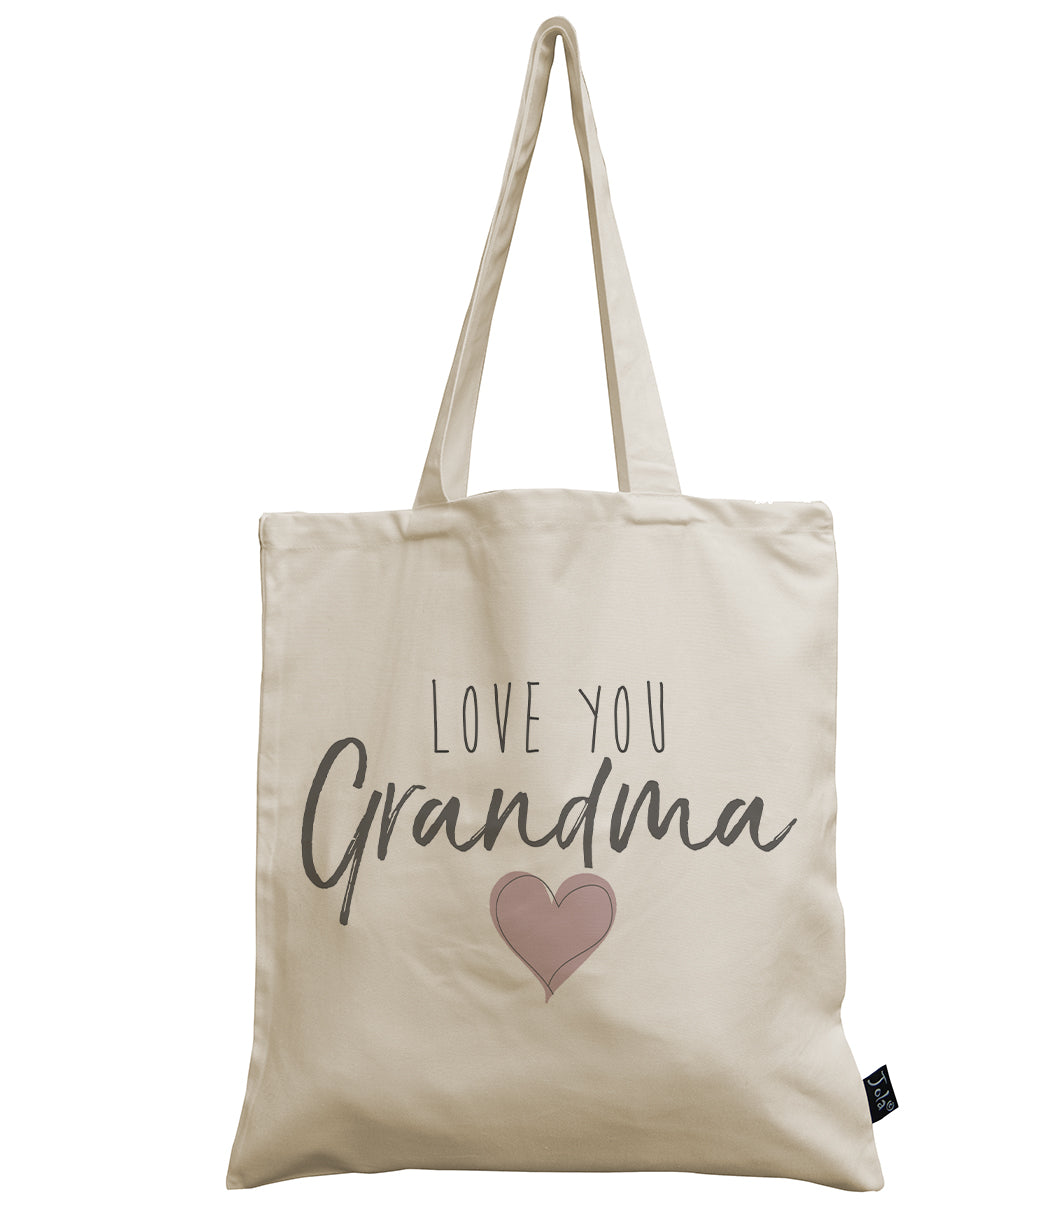 Love you Grandma canvas bag